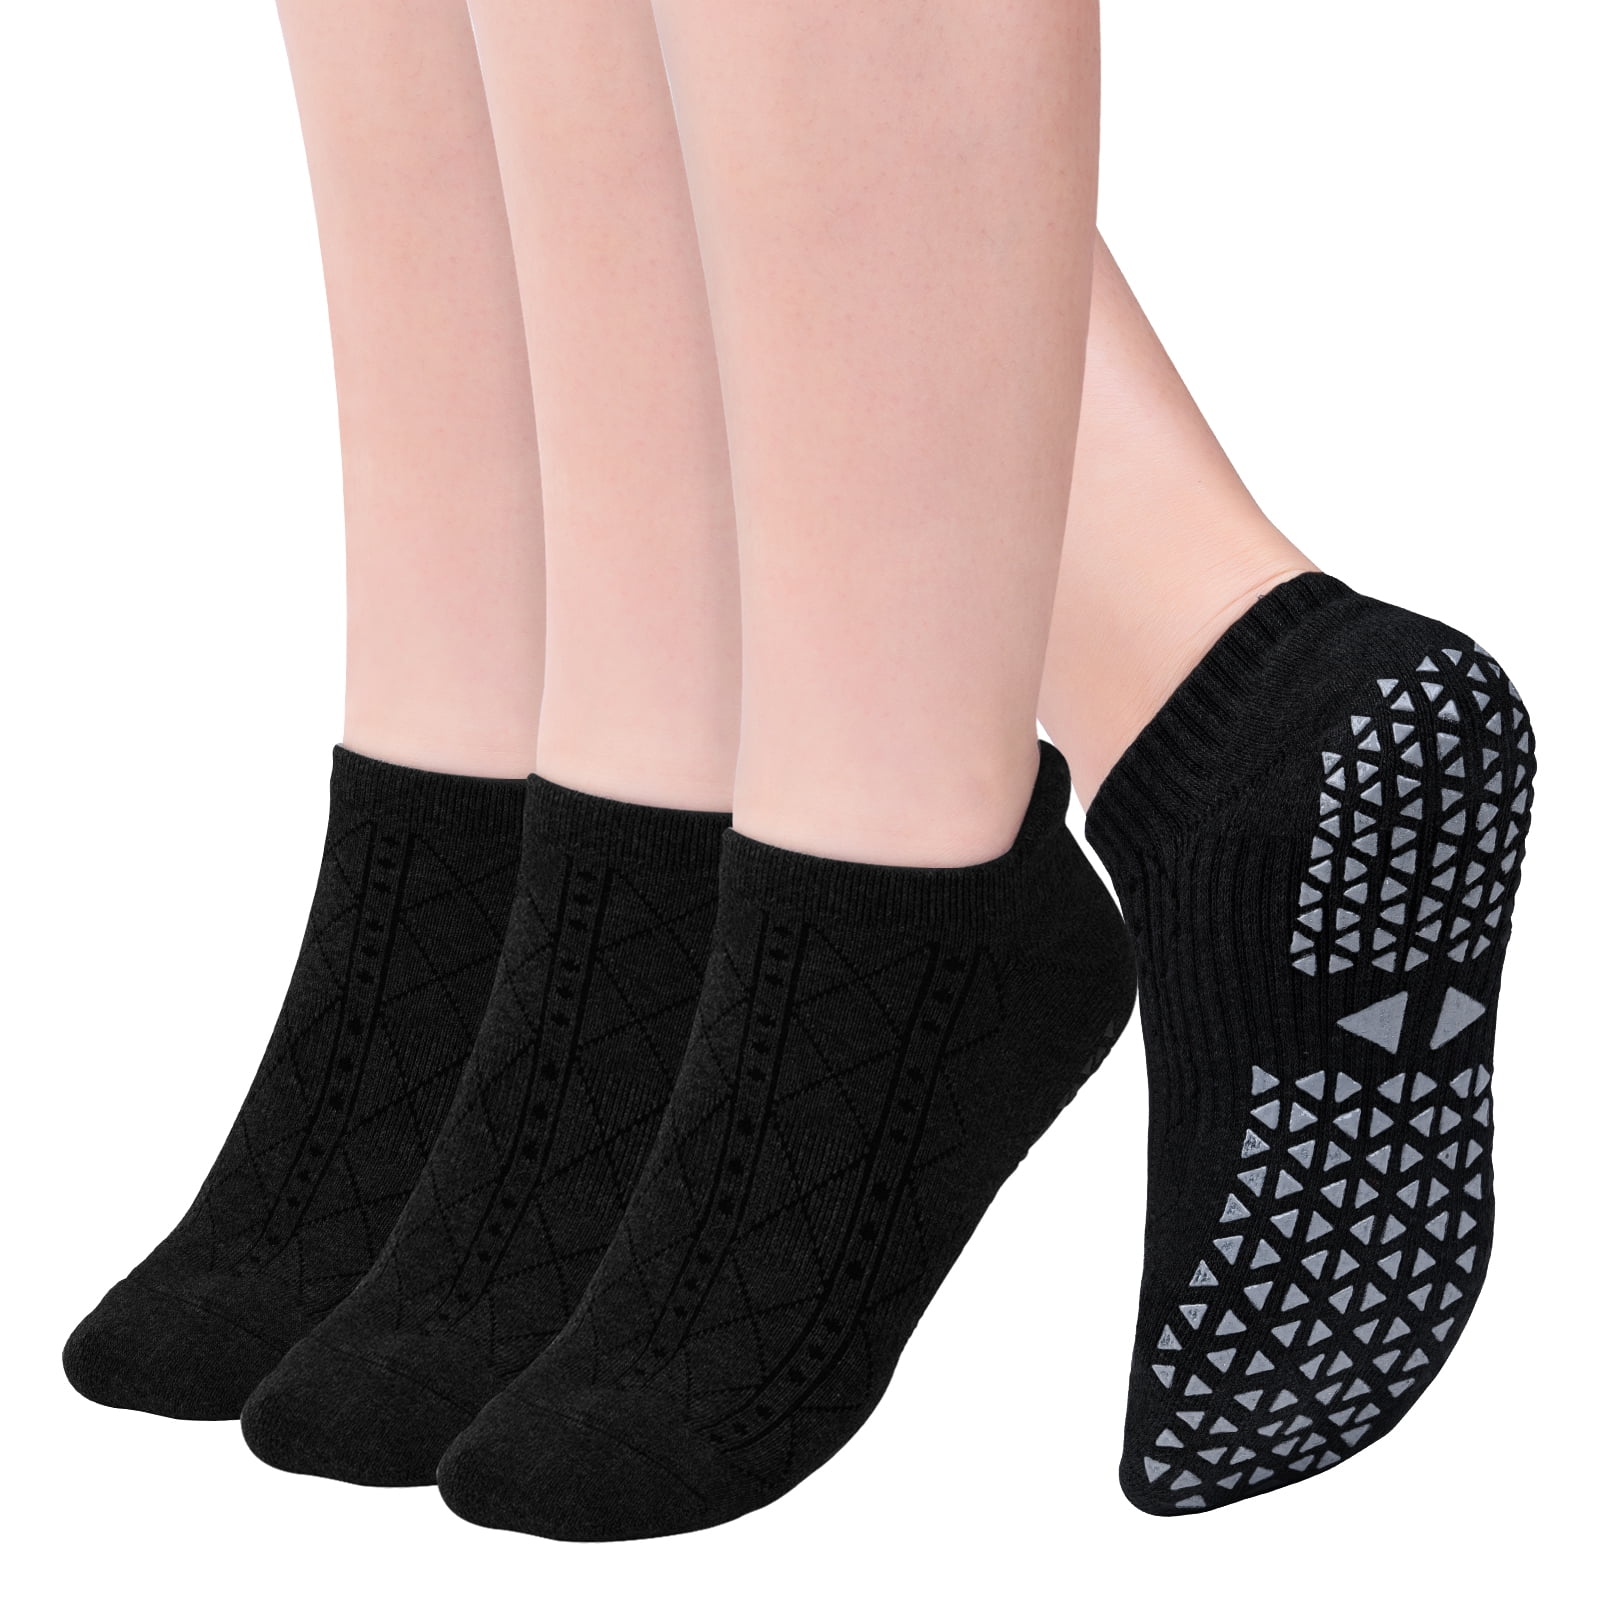 WFYUAN 5 Pairs Non Skid Socks Anti-Slip Yoga Socks for Women and Girls 